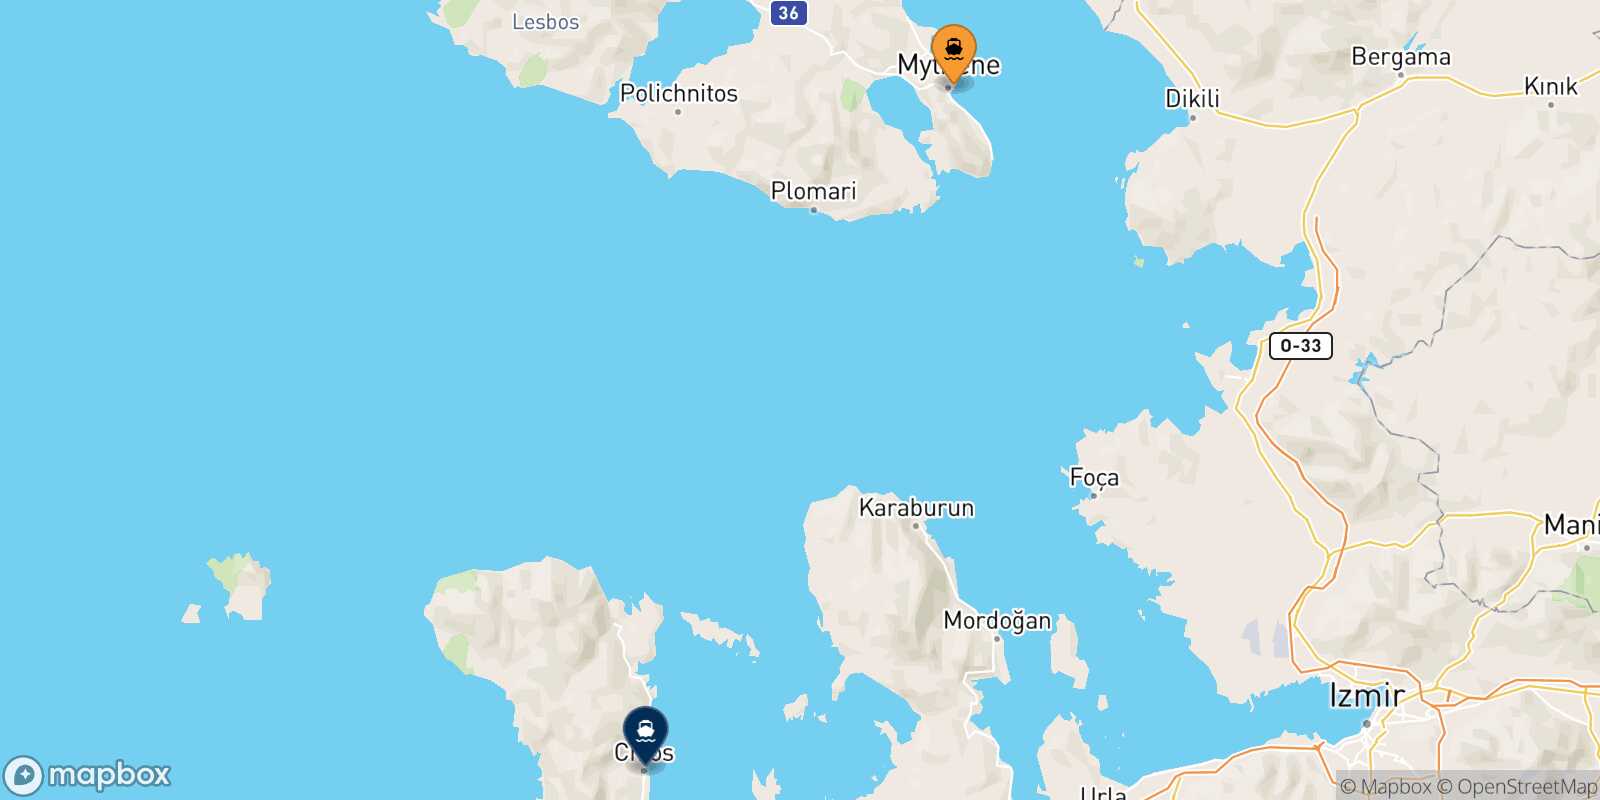 Mytilene (Lesvos) Chios route map